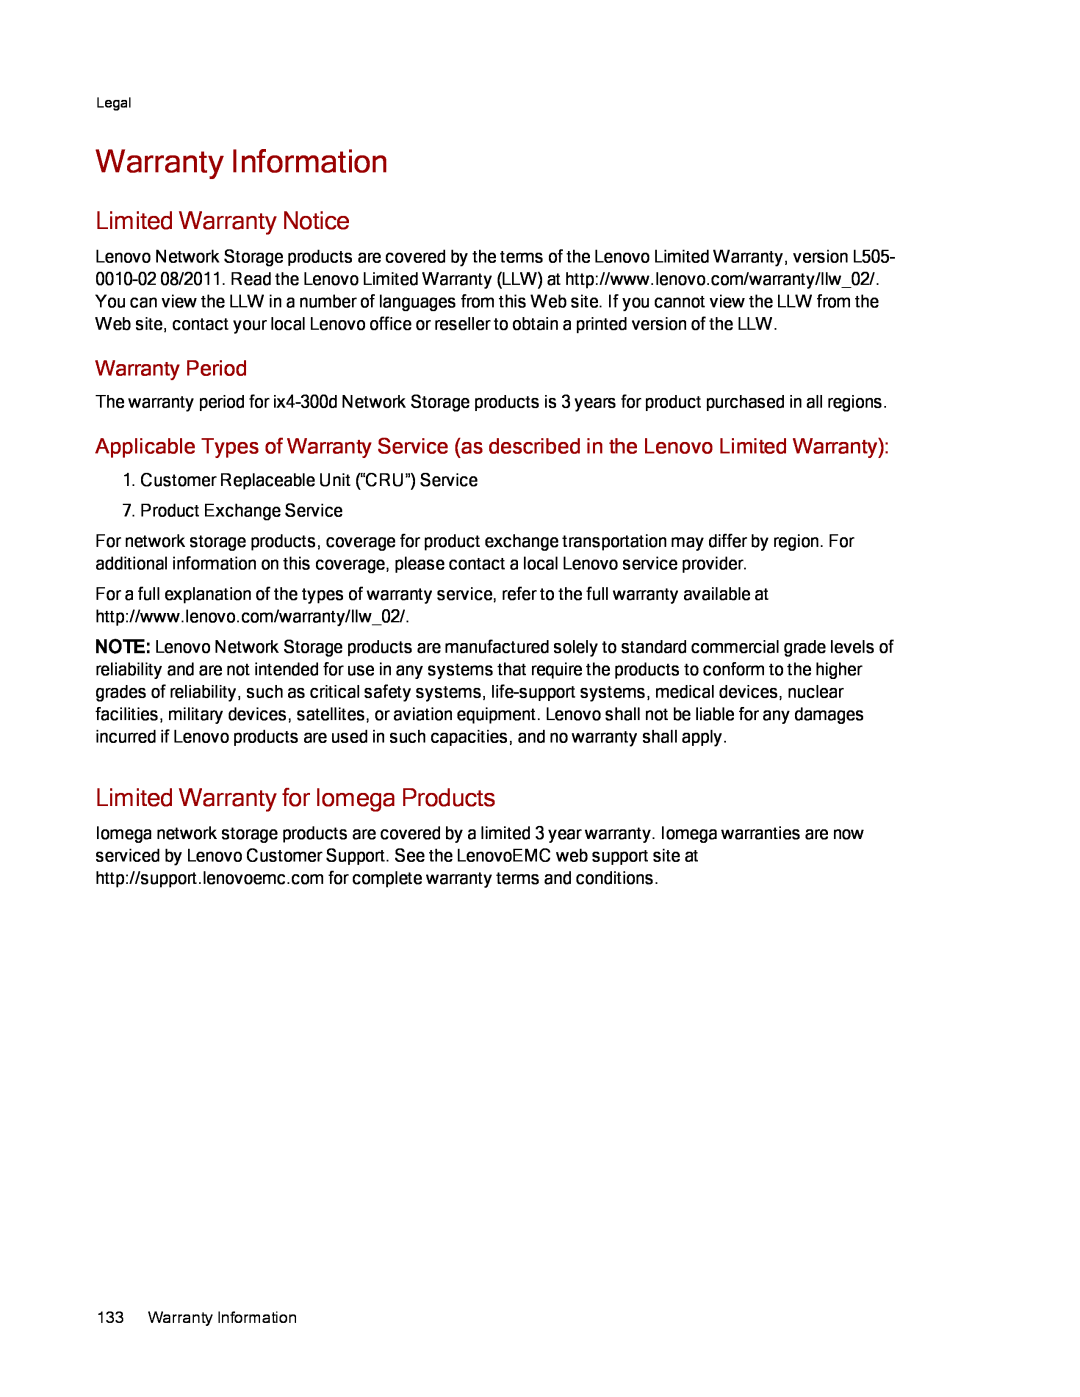 Lenovo 70B89000NA Warranty Information, Limited Warranty Notice, Limited Warranty for Iomega Products, Warranty Period 